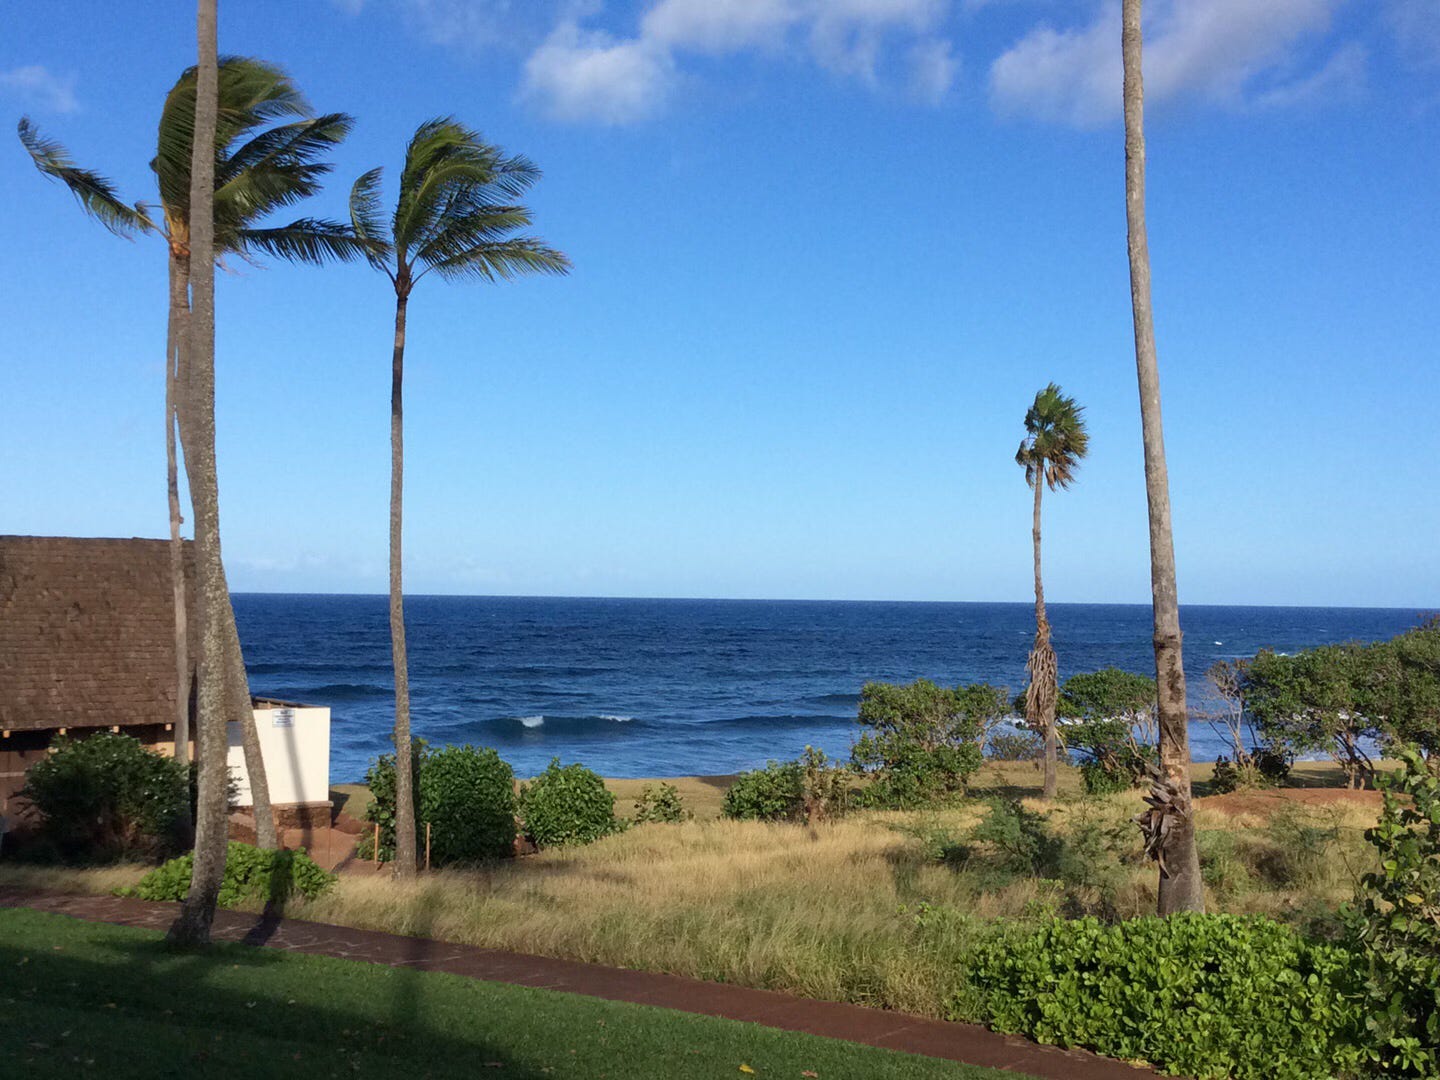 Palm trees and the Pacific Ocean off the island of Molokai'i (Hawai'i)